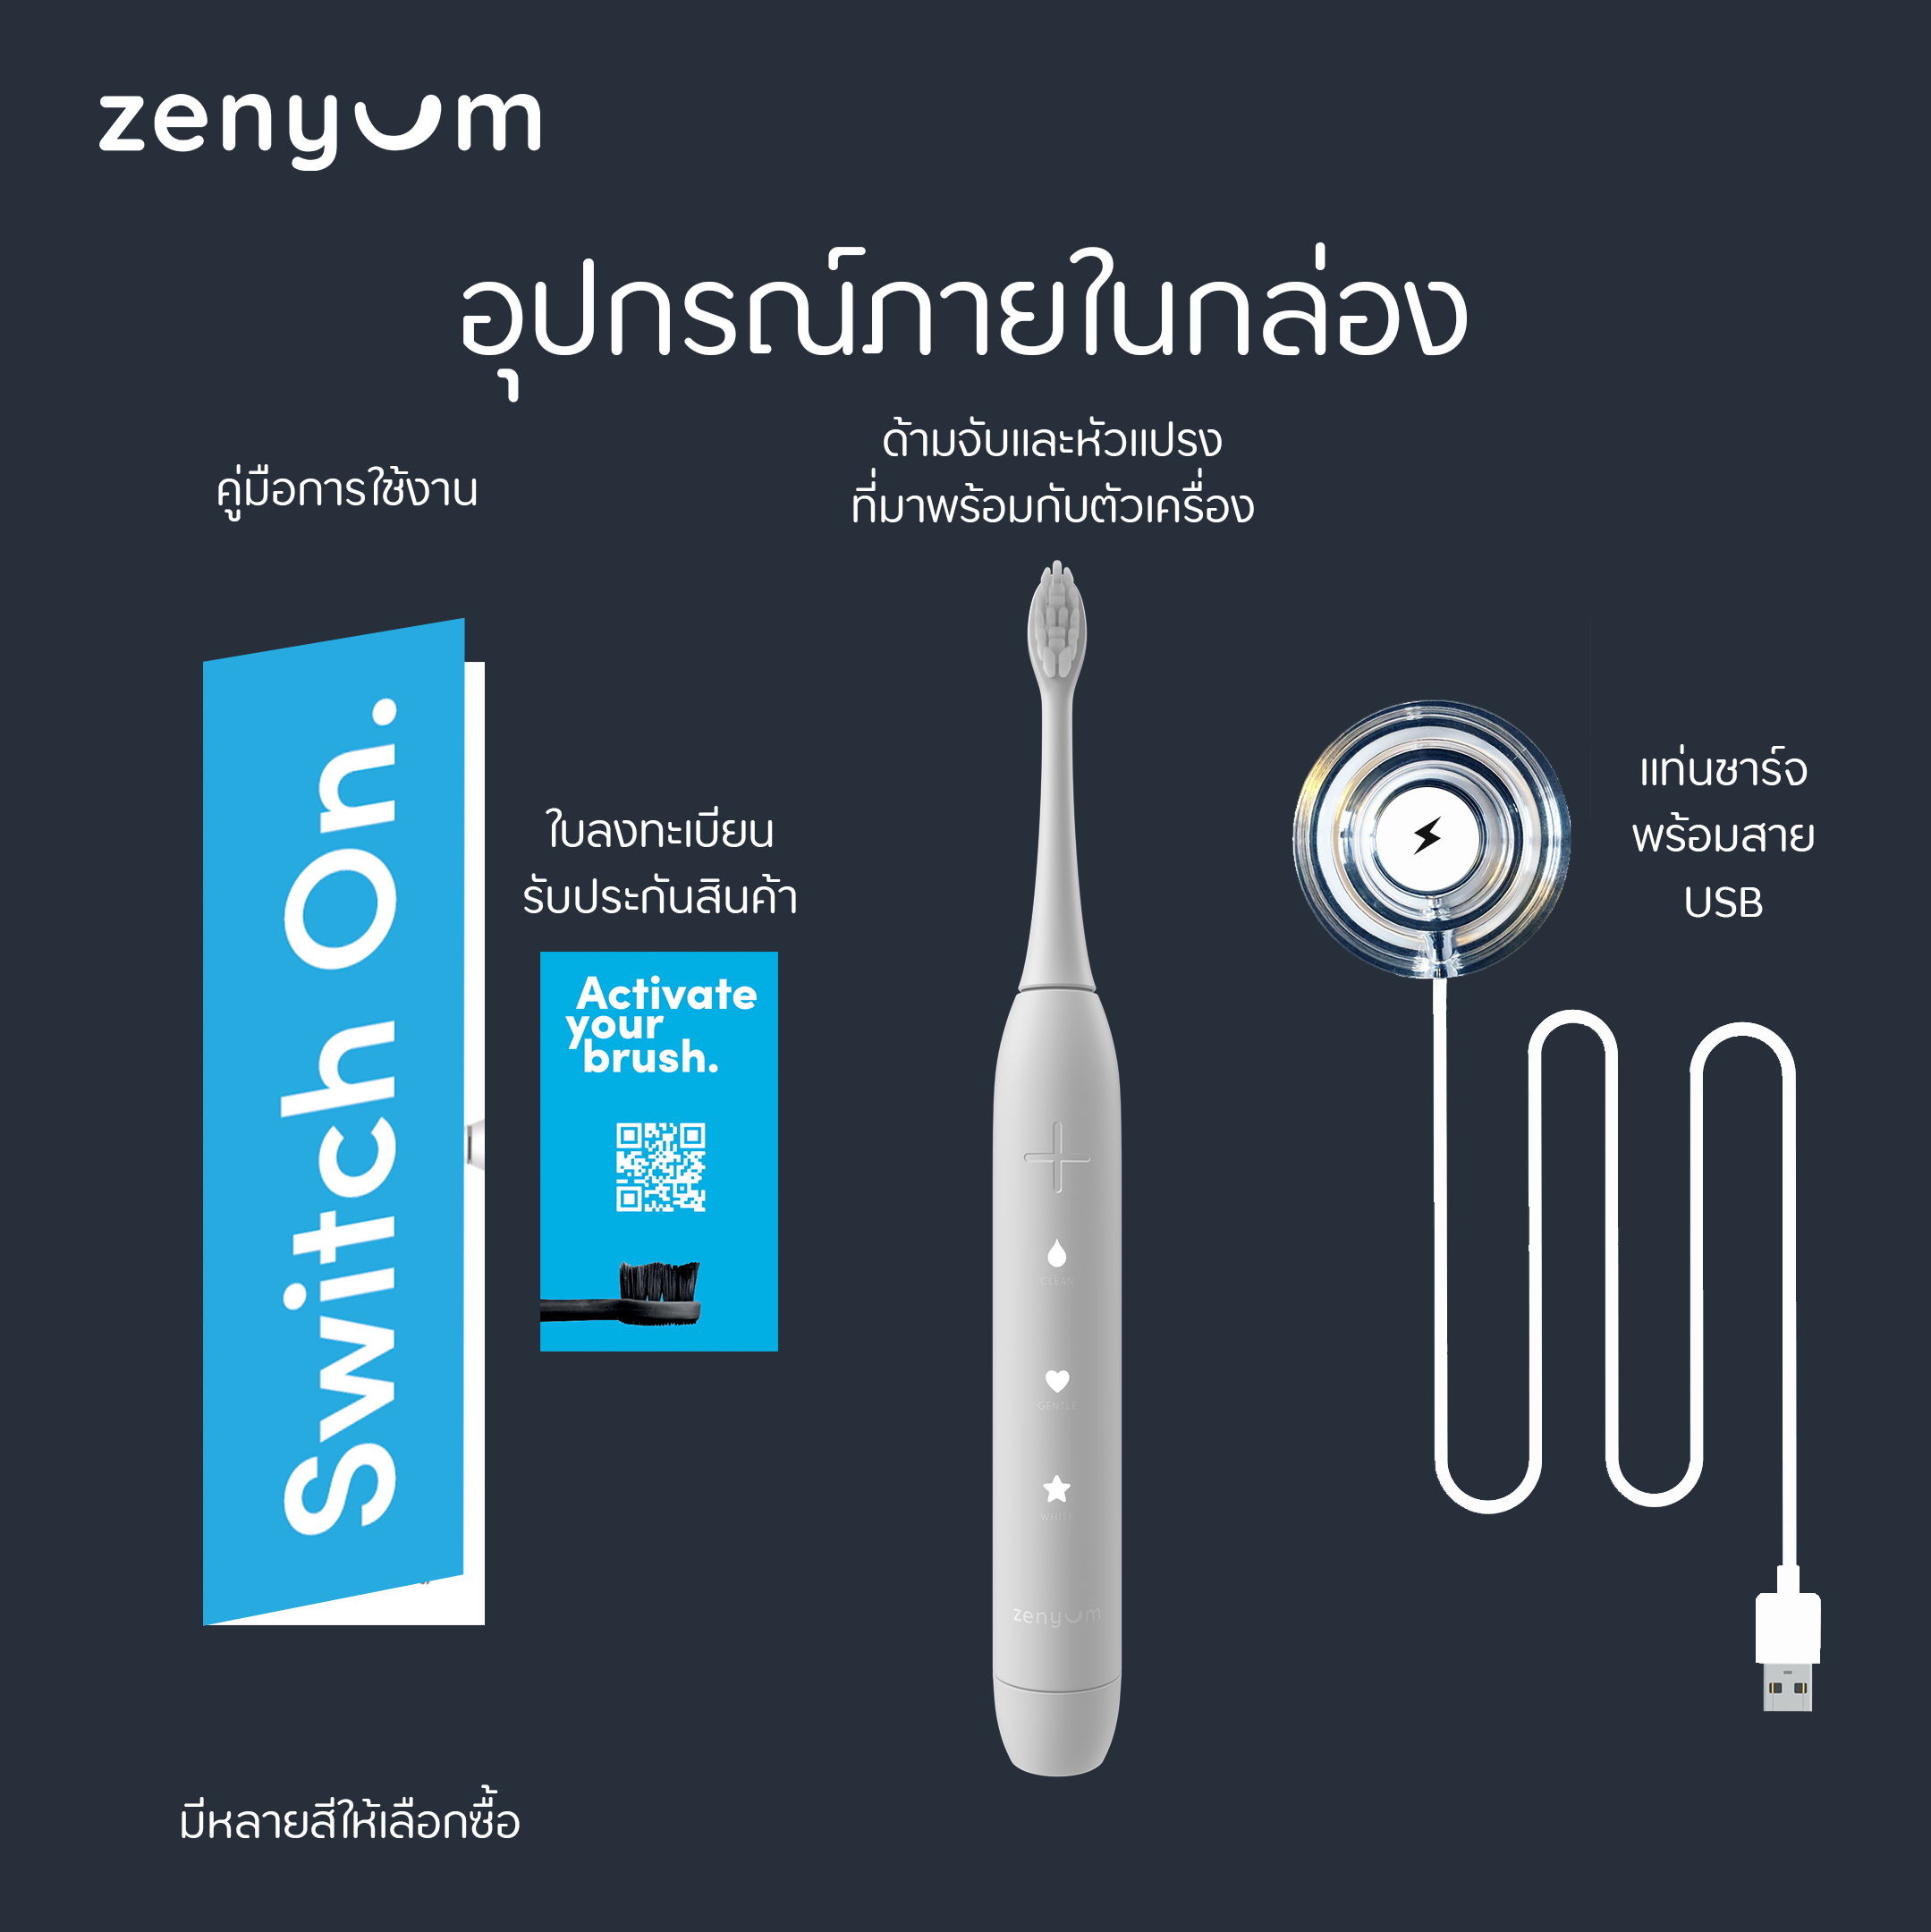 Zenyum แพ็กคู่ แปรงสีฟันไฟฟ้า Zenyum Sonic  (แปรงสีฟัน แปรงไฟฟ้า ไม่จัดฟันใช้ได้ จัดฟันใสใช้ได้  ชาร์จไร้สาย 3โหมด whitening gentle deep clean electric toothbrush wireless)